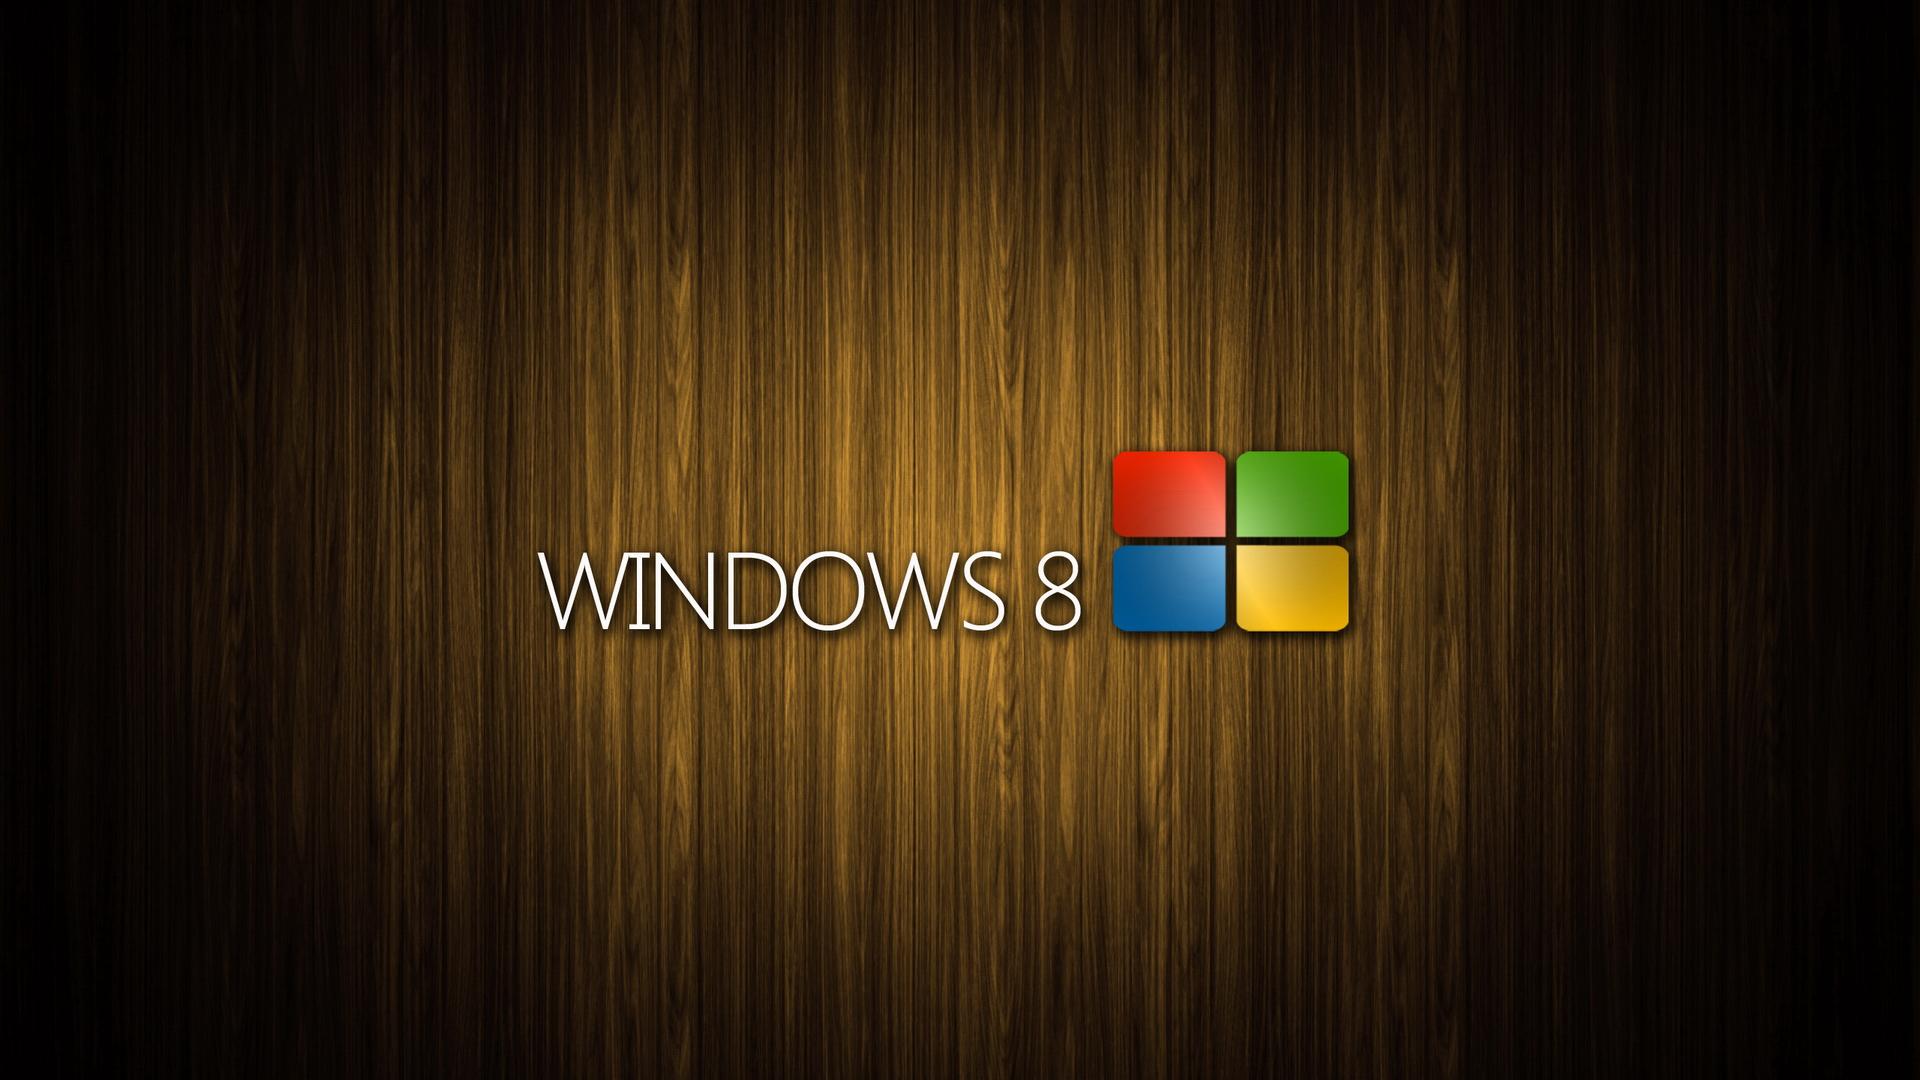 windows 8 wallpaper hd 1080p download #23